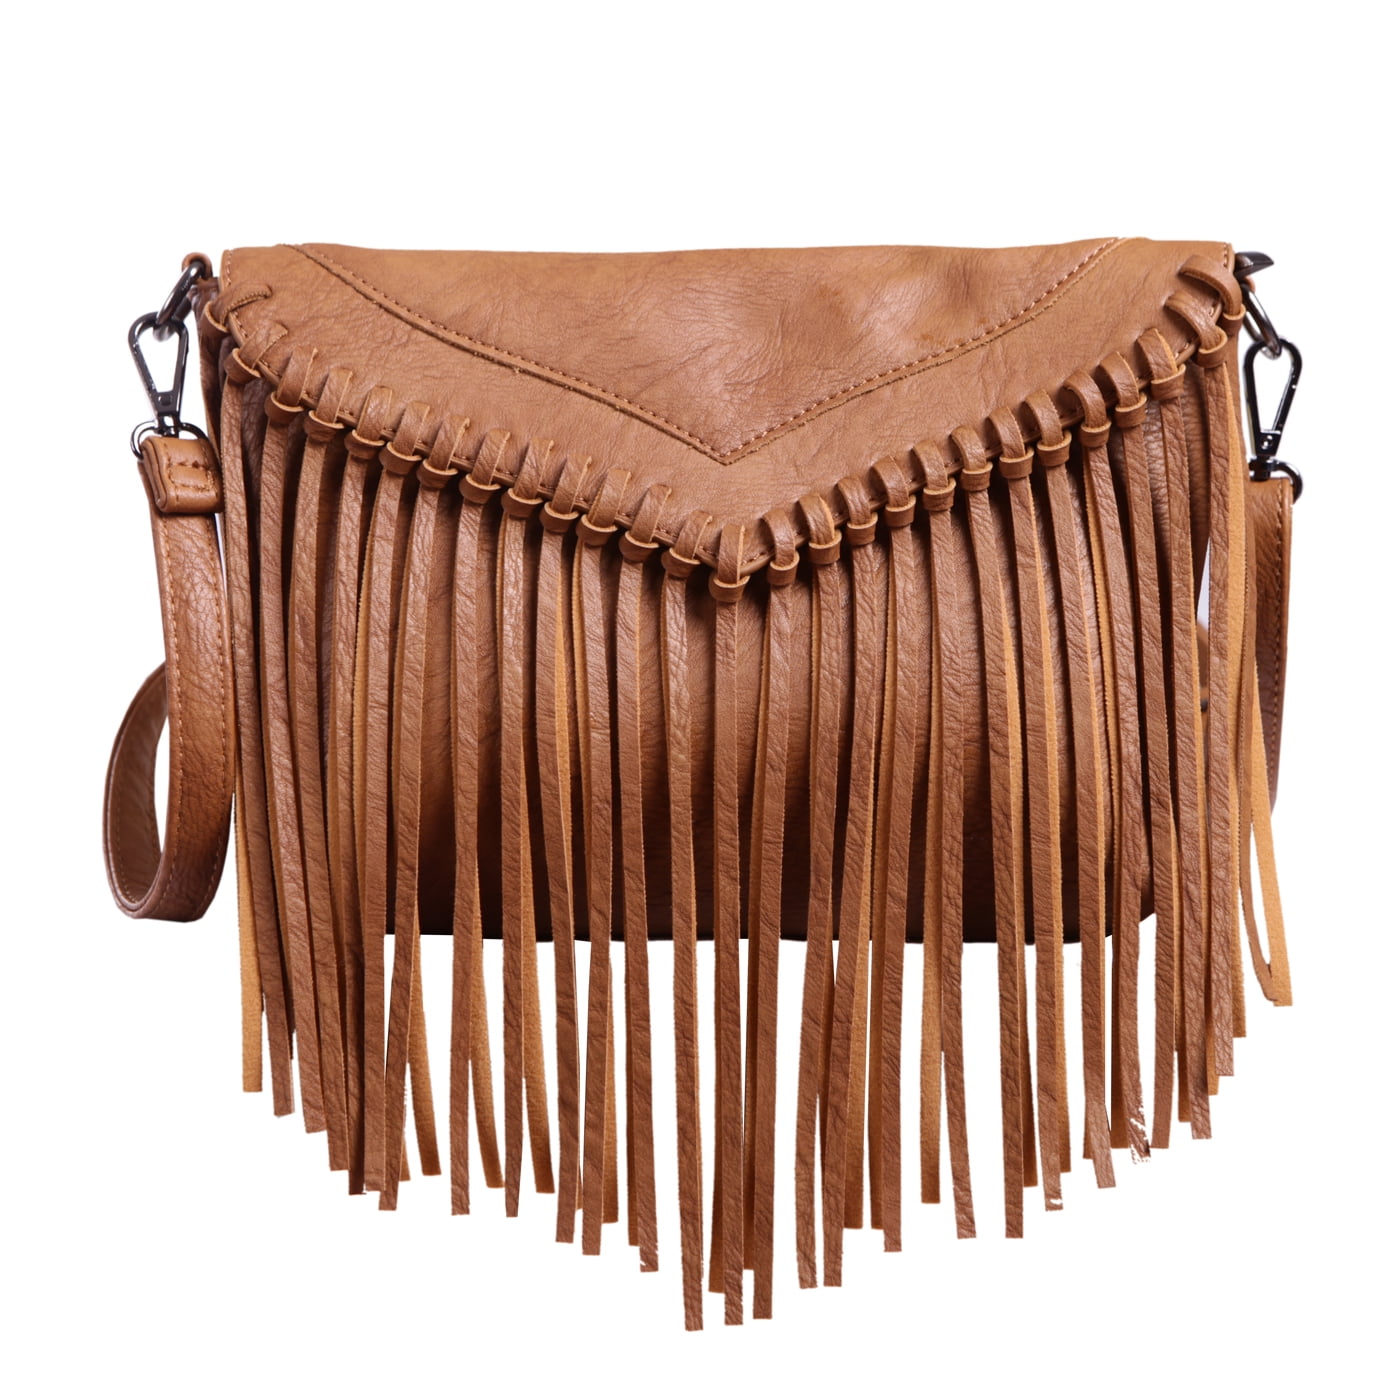 NEW Free People Feed Leather Tassel Brown Handbag Accessory 